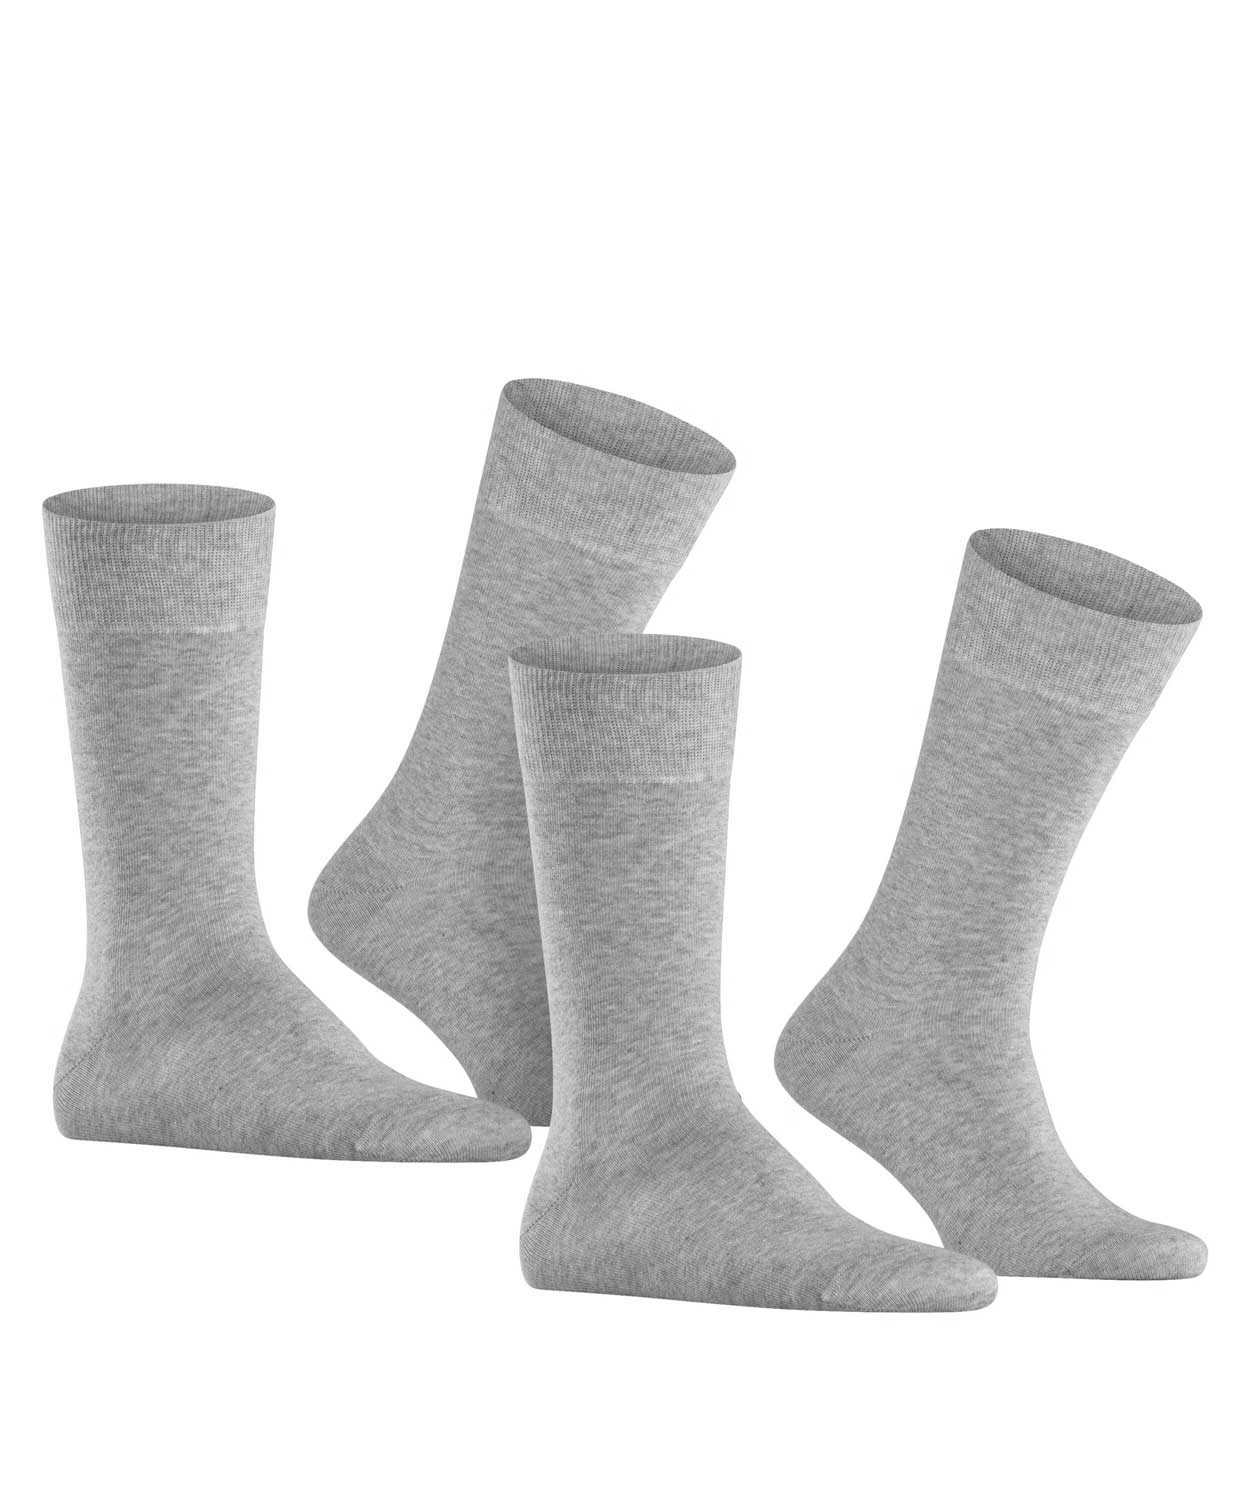 2p Socks - Every day 